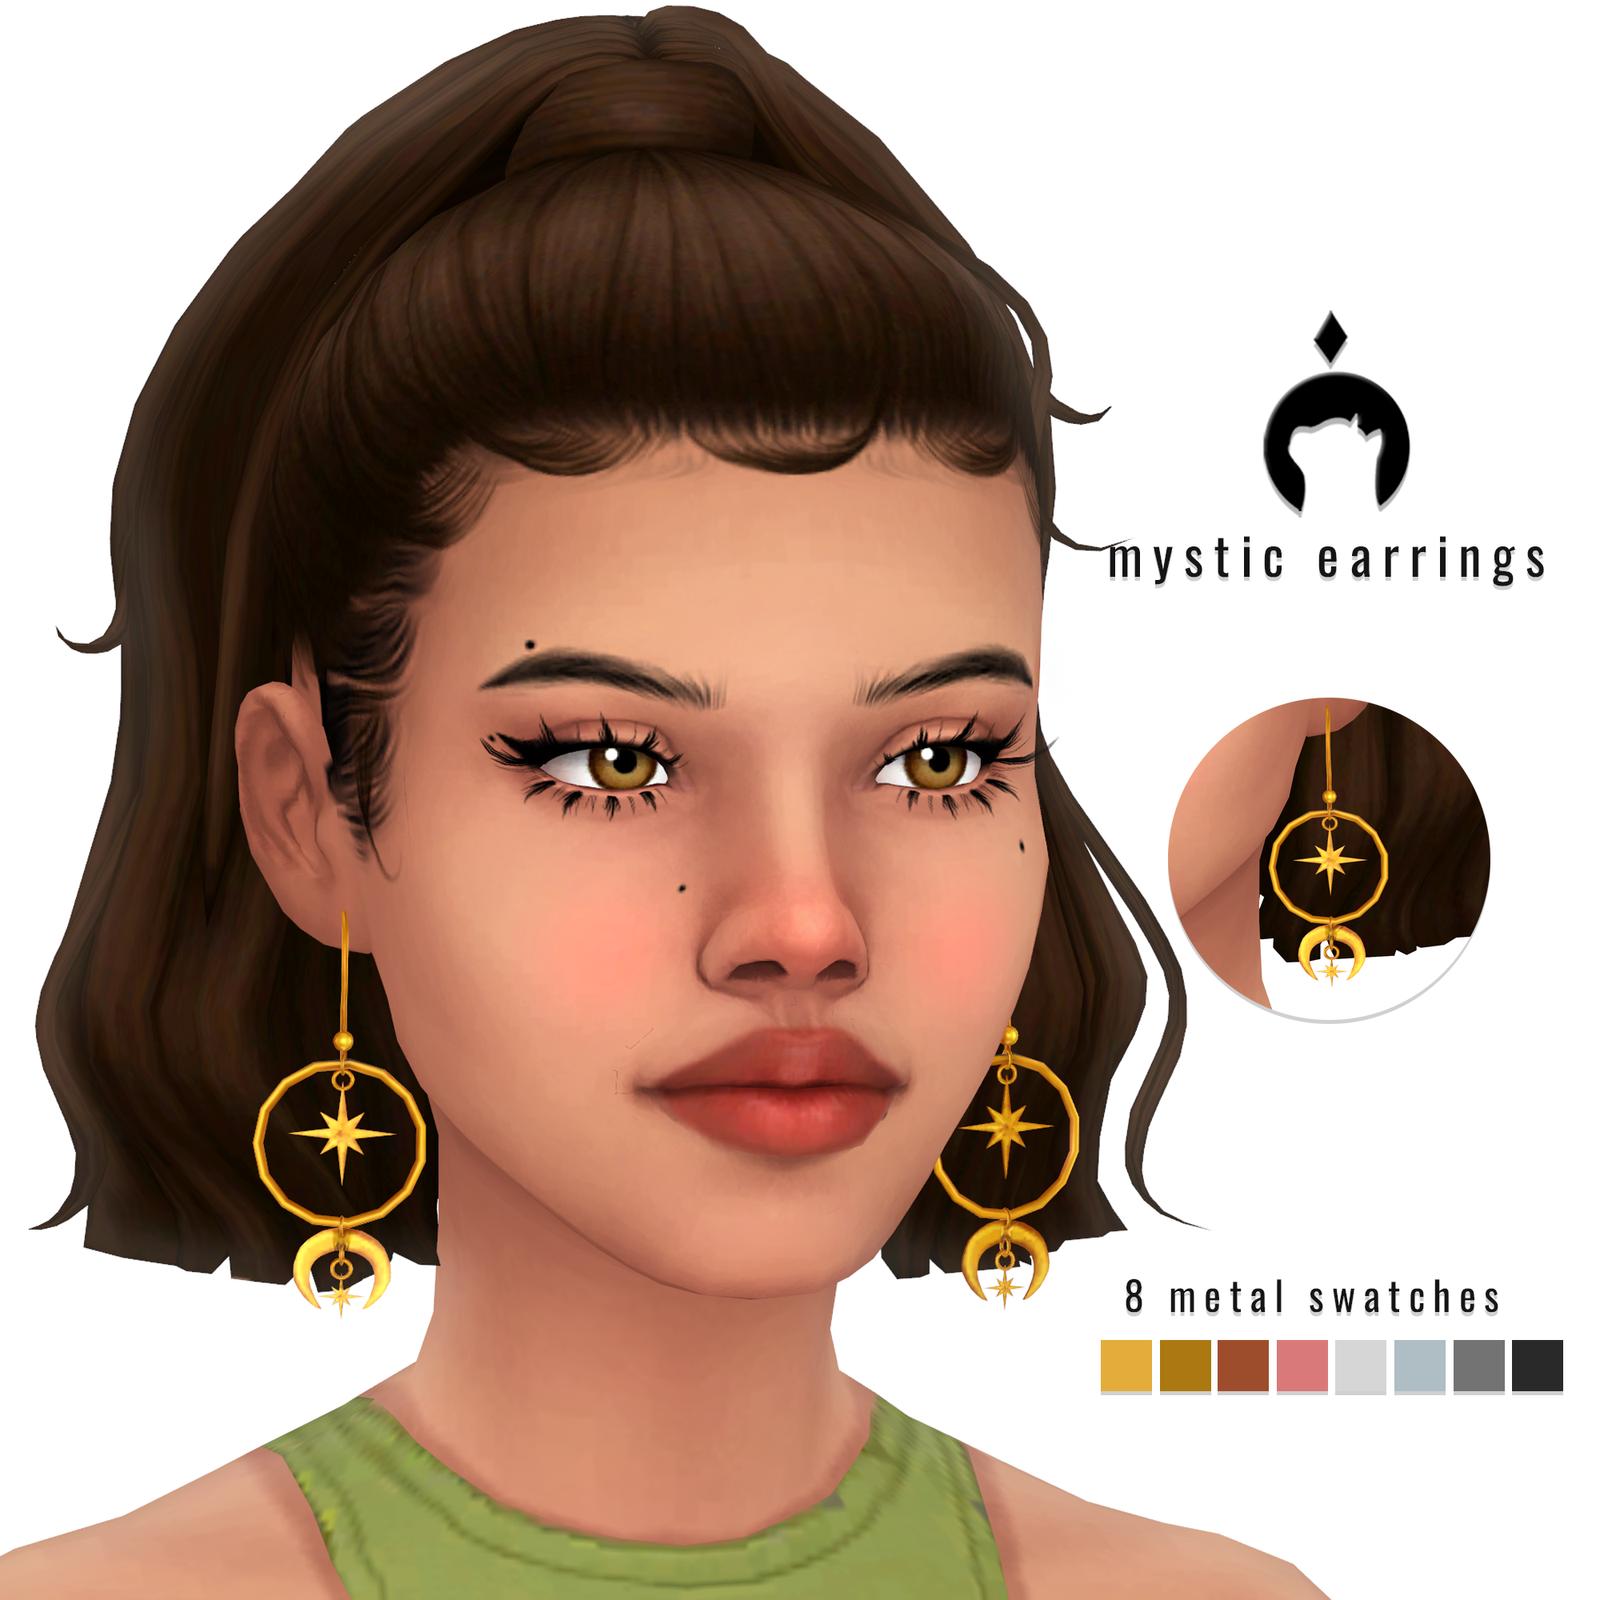 4231 starry and mystic earrings ikari sims